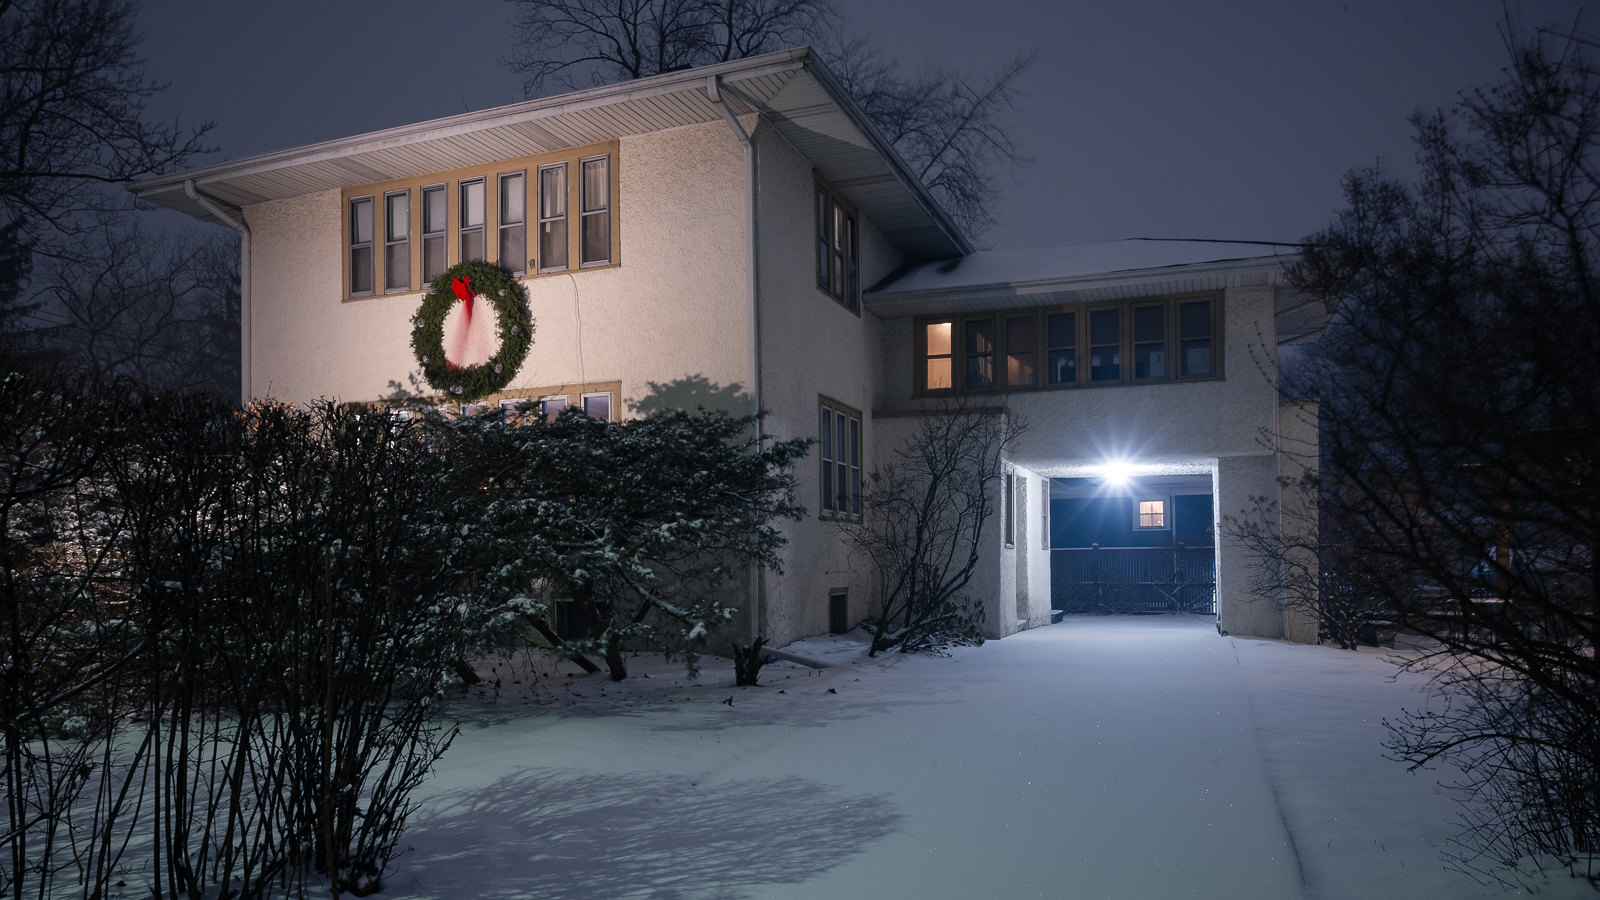 Christmas Spirit at the Heisen House